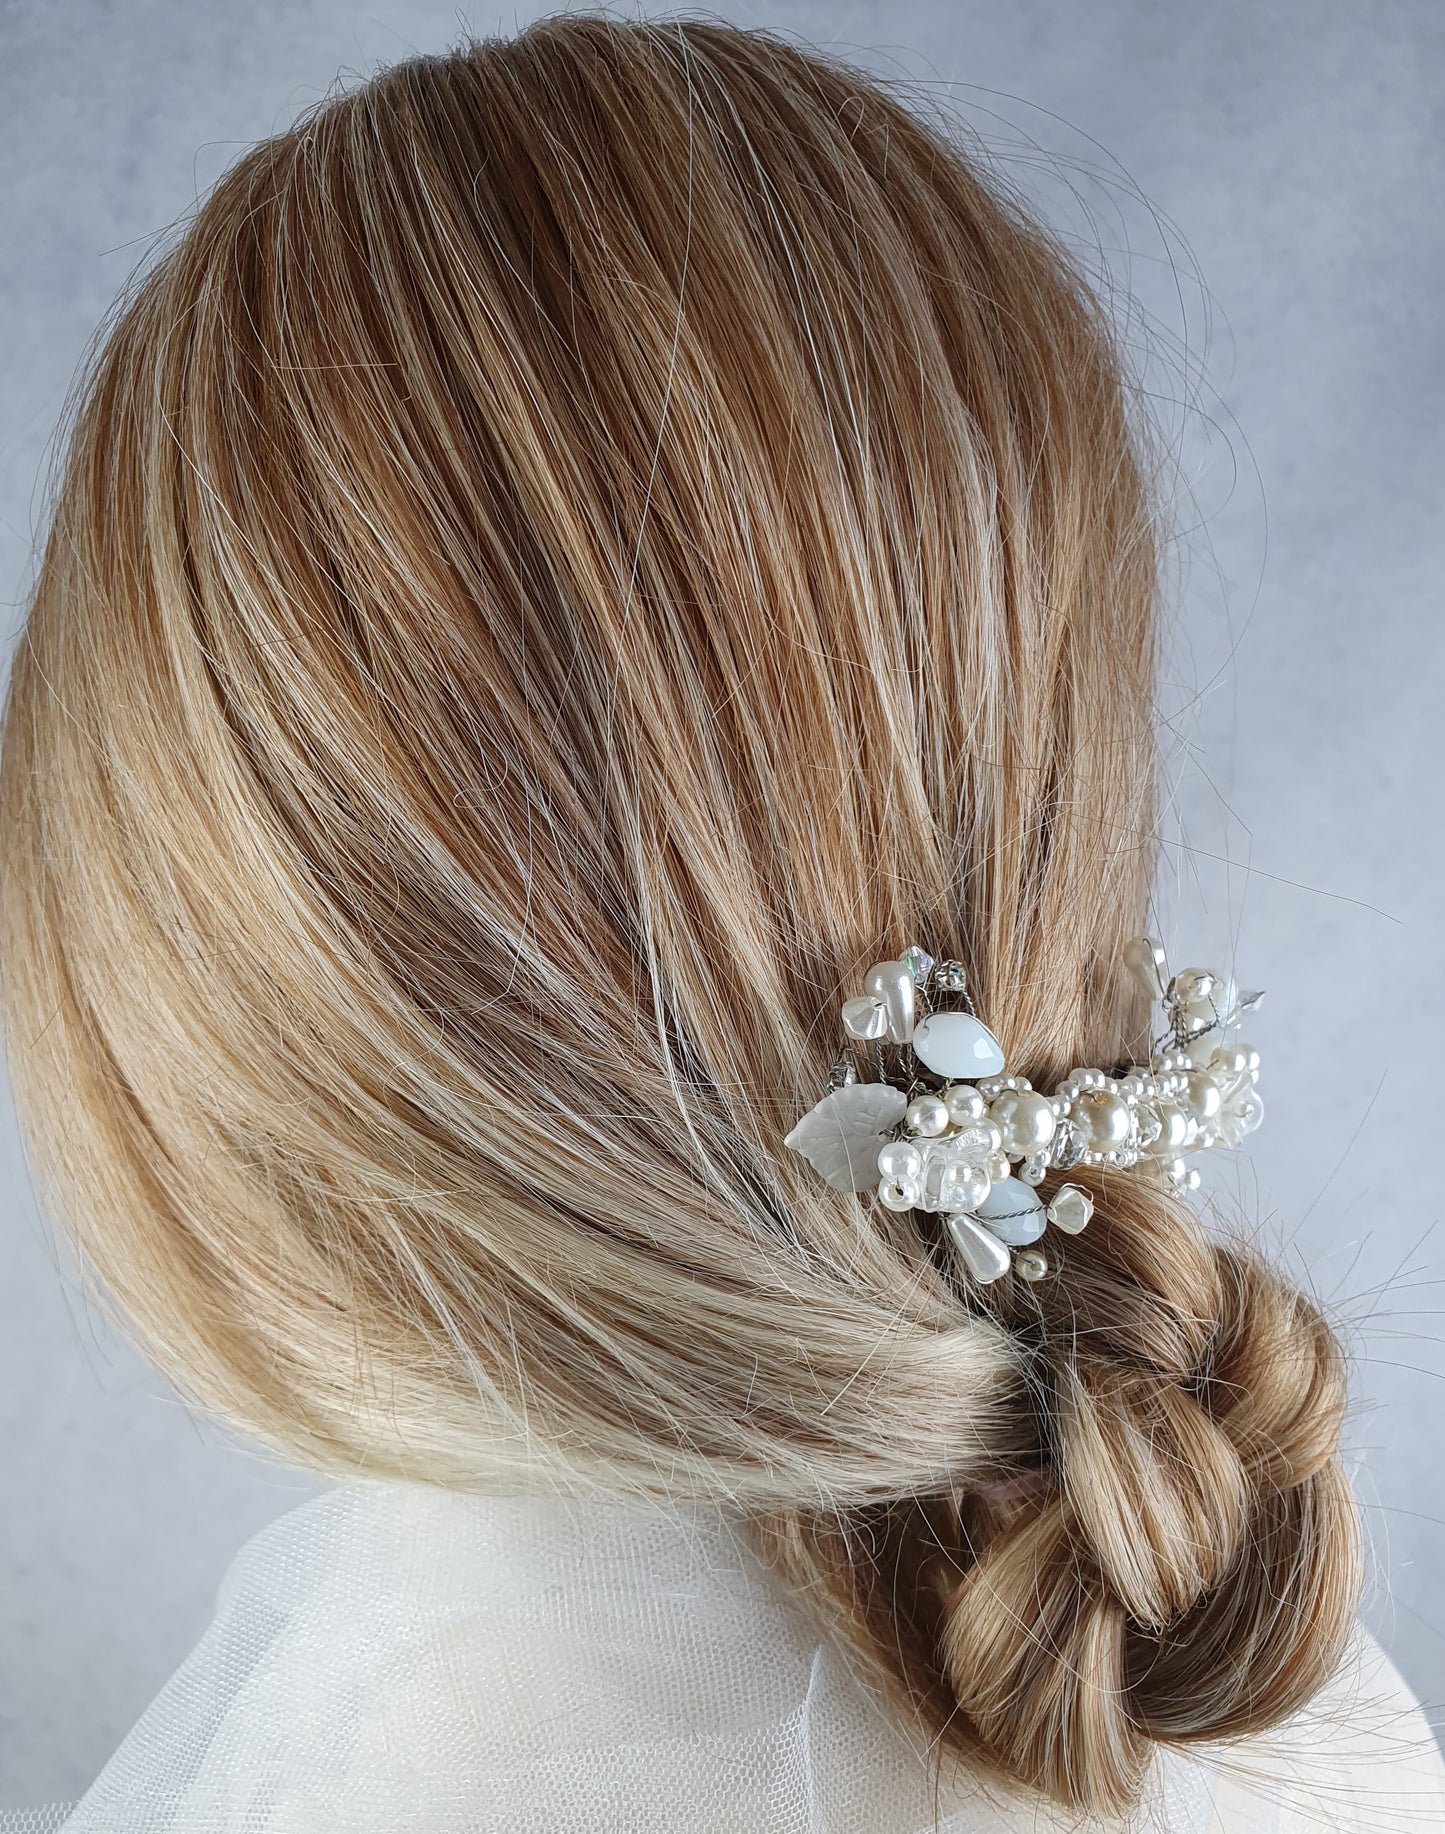 Pasador de pelo pequeño hecho a mano para novias o invitadas - accesorios para el cabello, pasador de pelo de perlas plateadas, ocasión especial